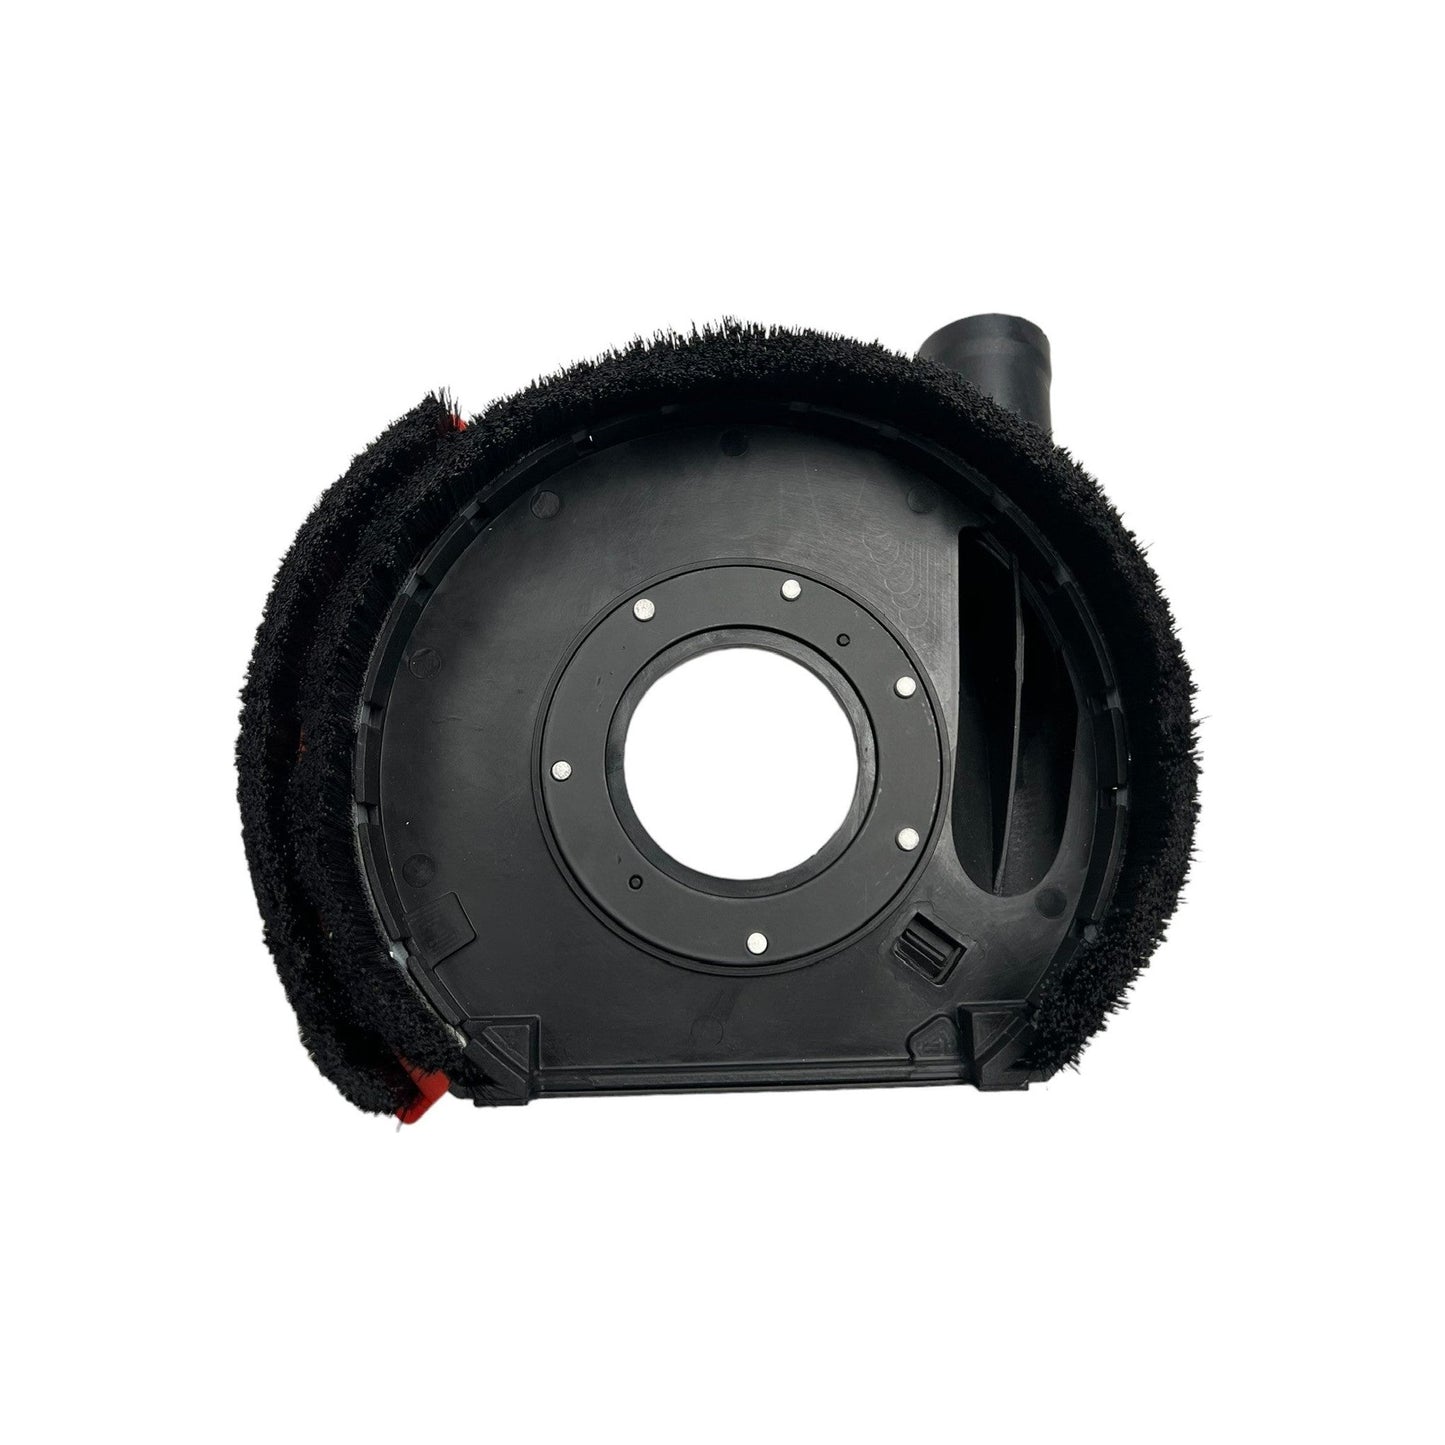 7" Dust Shroud - Universal Mount - Adjustable - Grinding Wheels - Angle Grinder